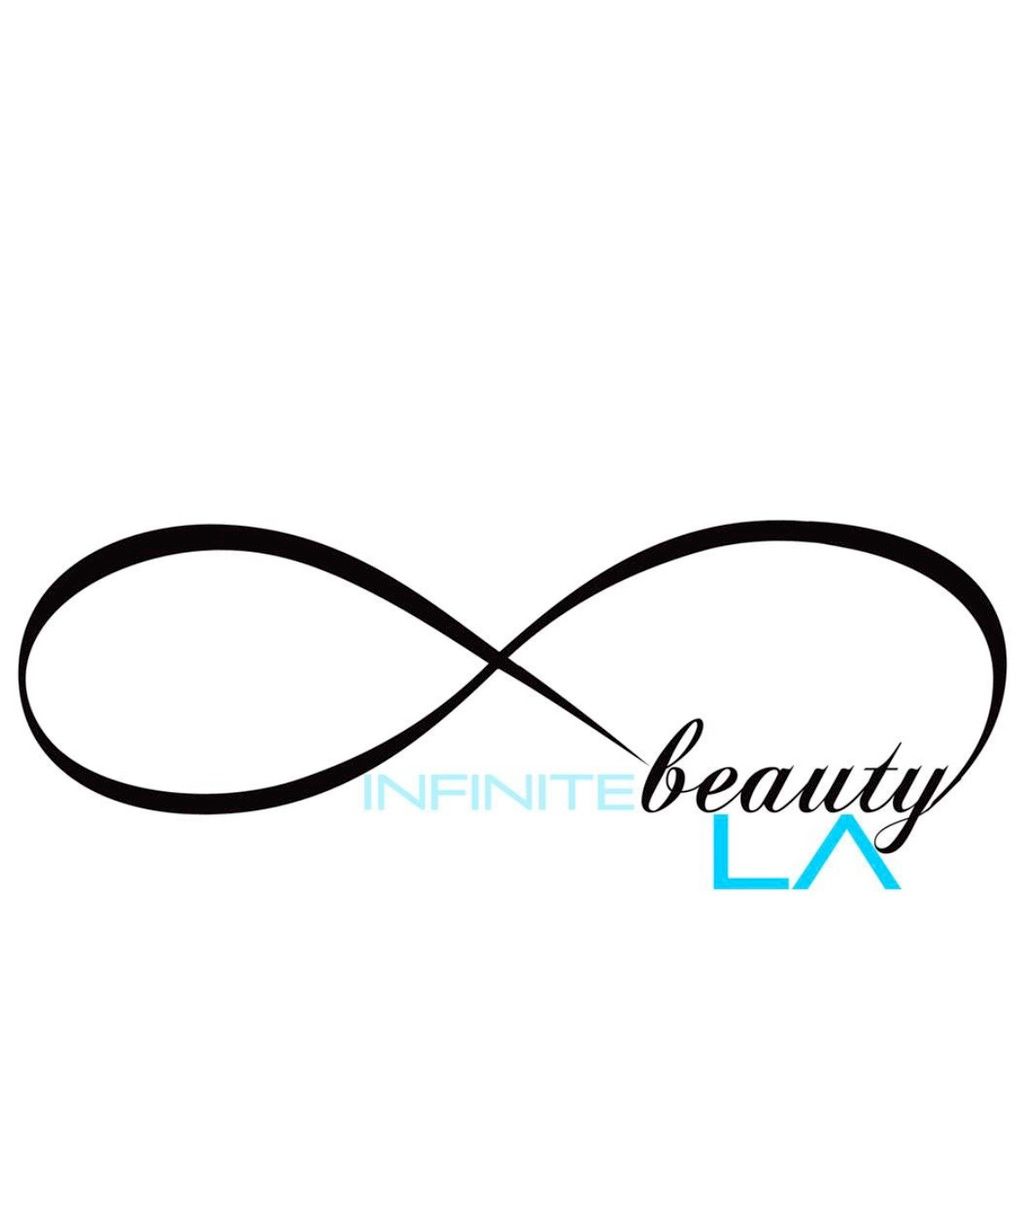 Infinite Beauty LA - Hair and Makeup